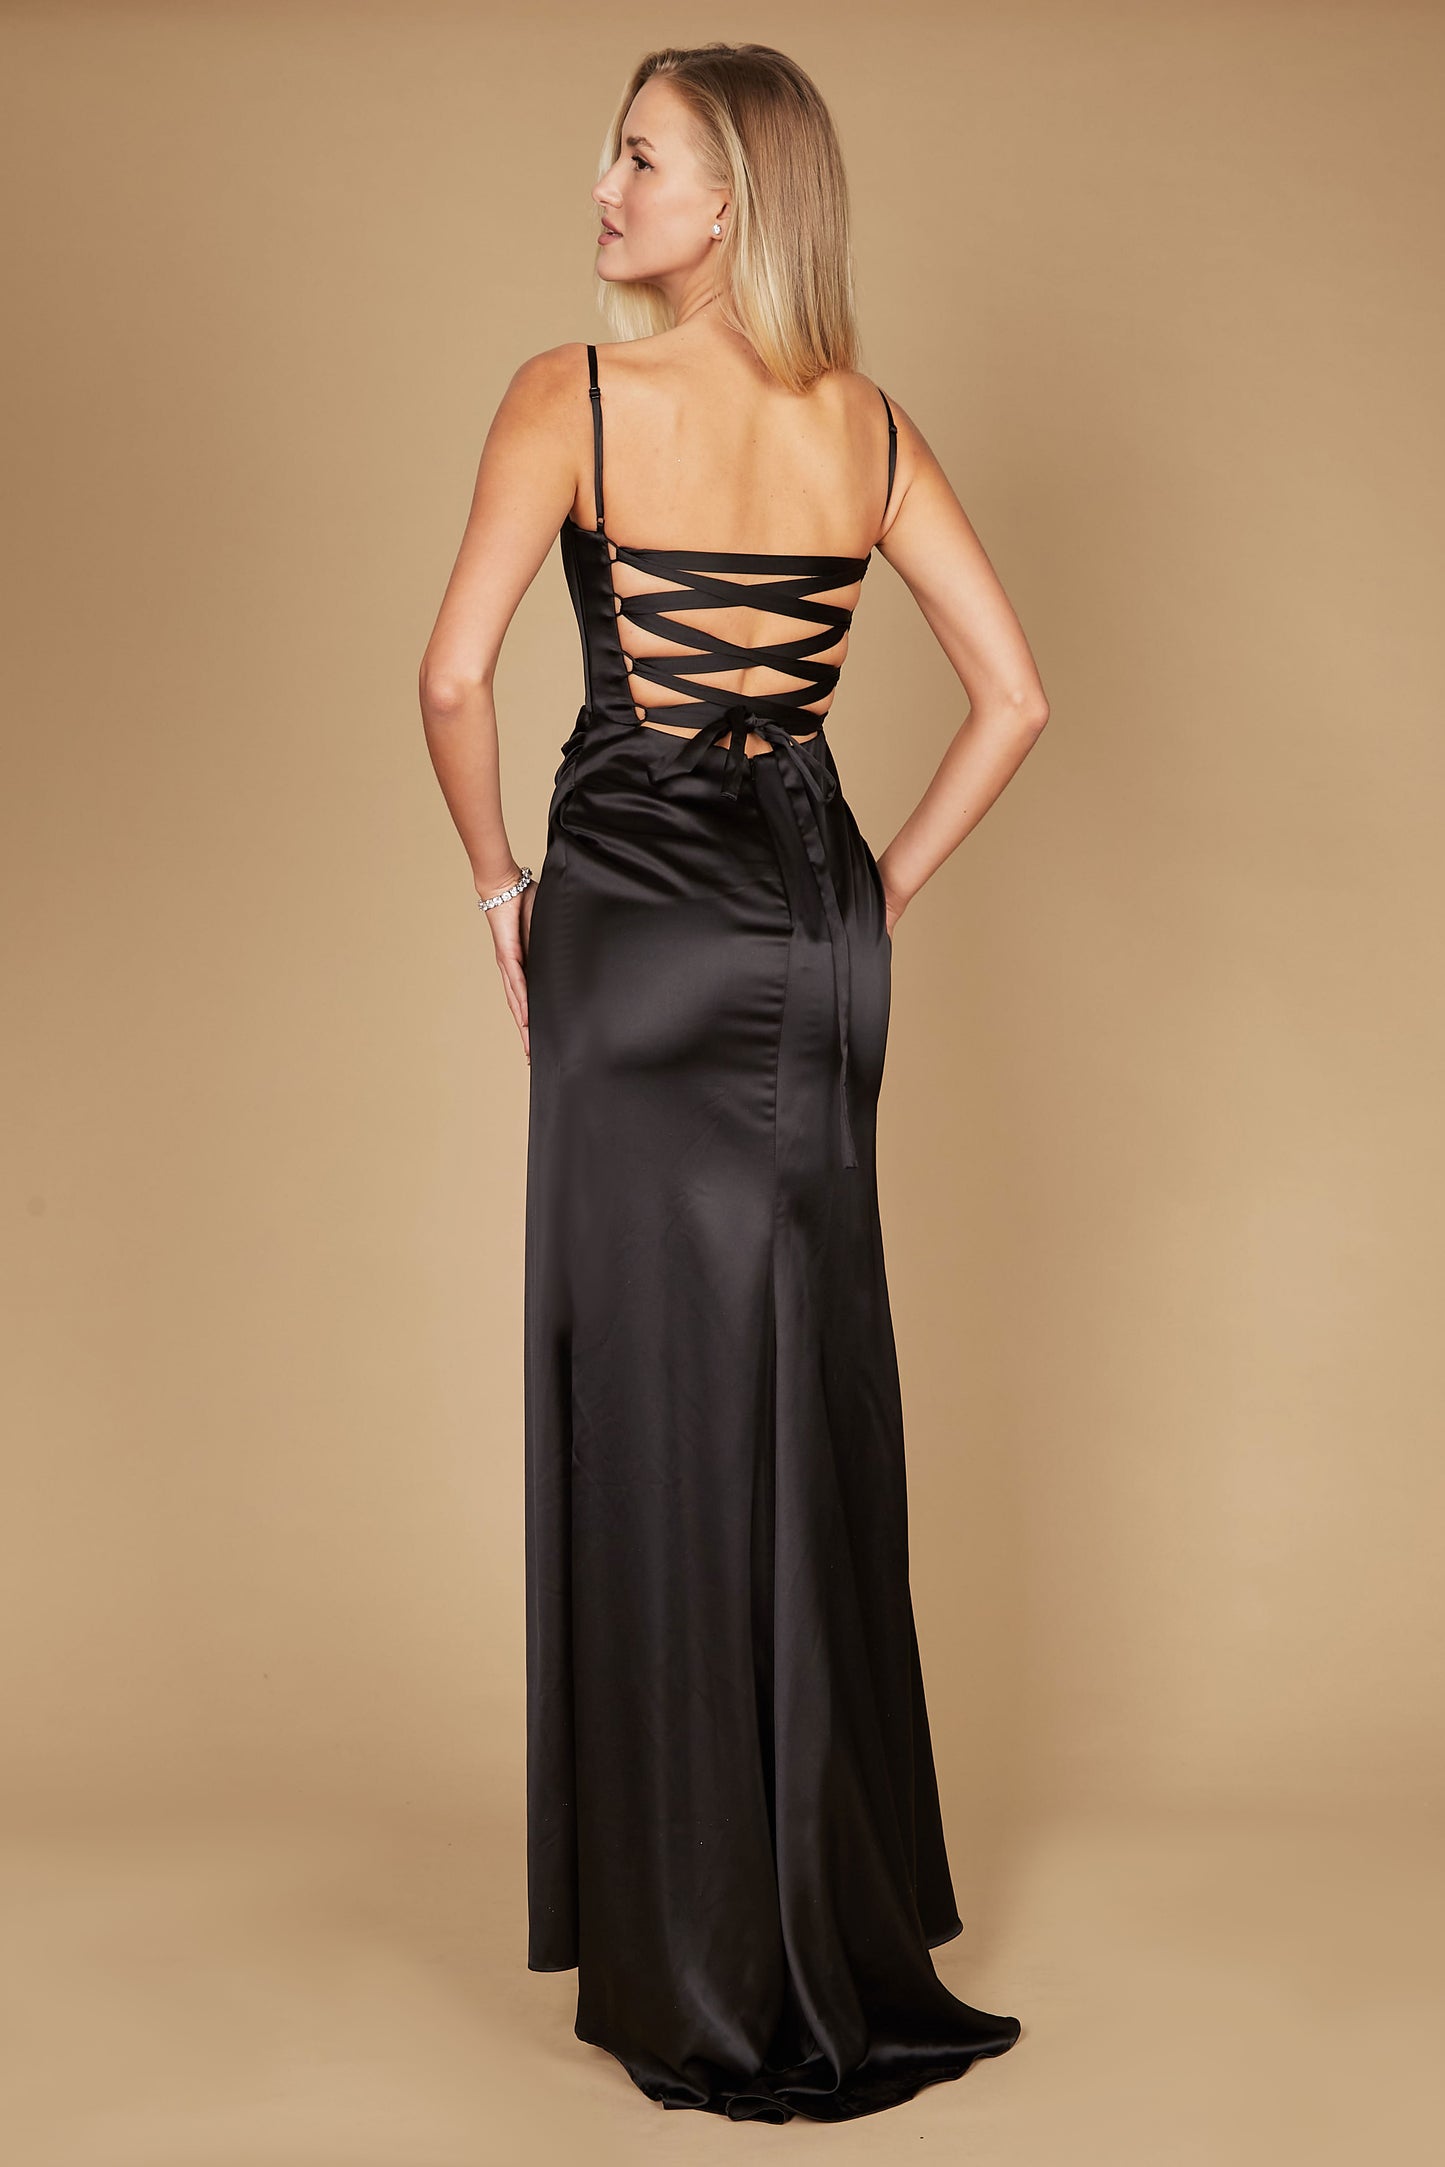 Formal Dresses Long Plunging Neckline Sexy Formal Prom Dress Black